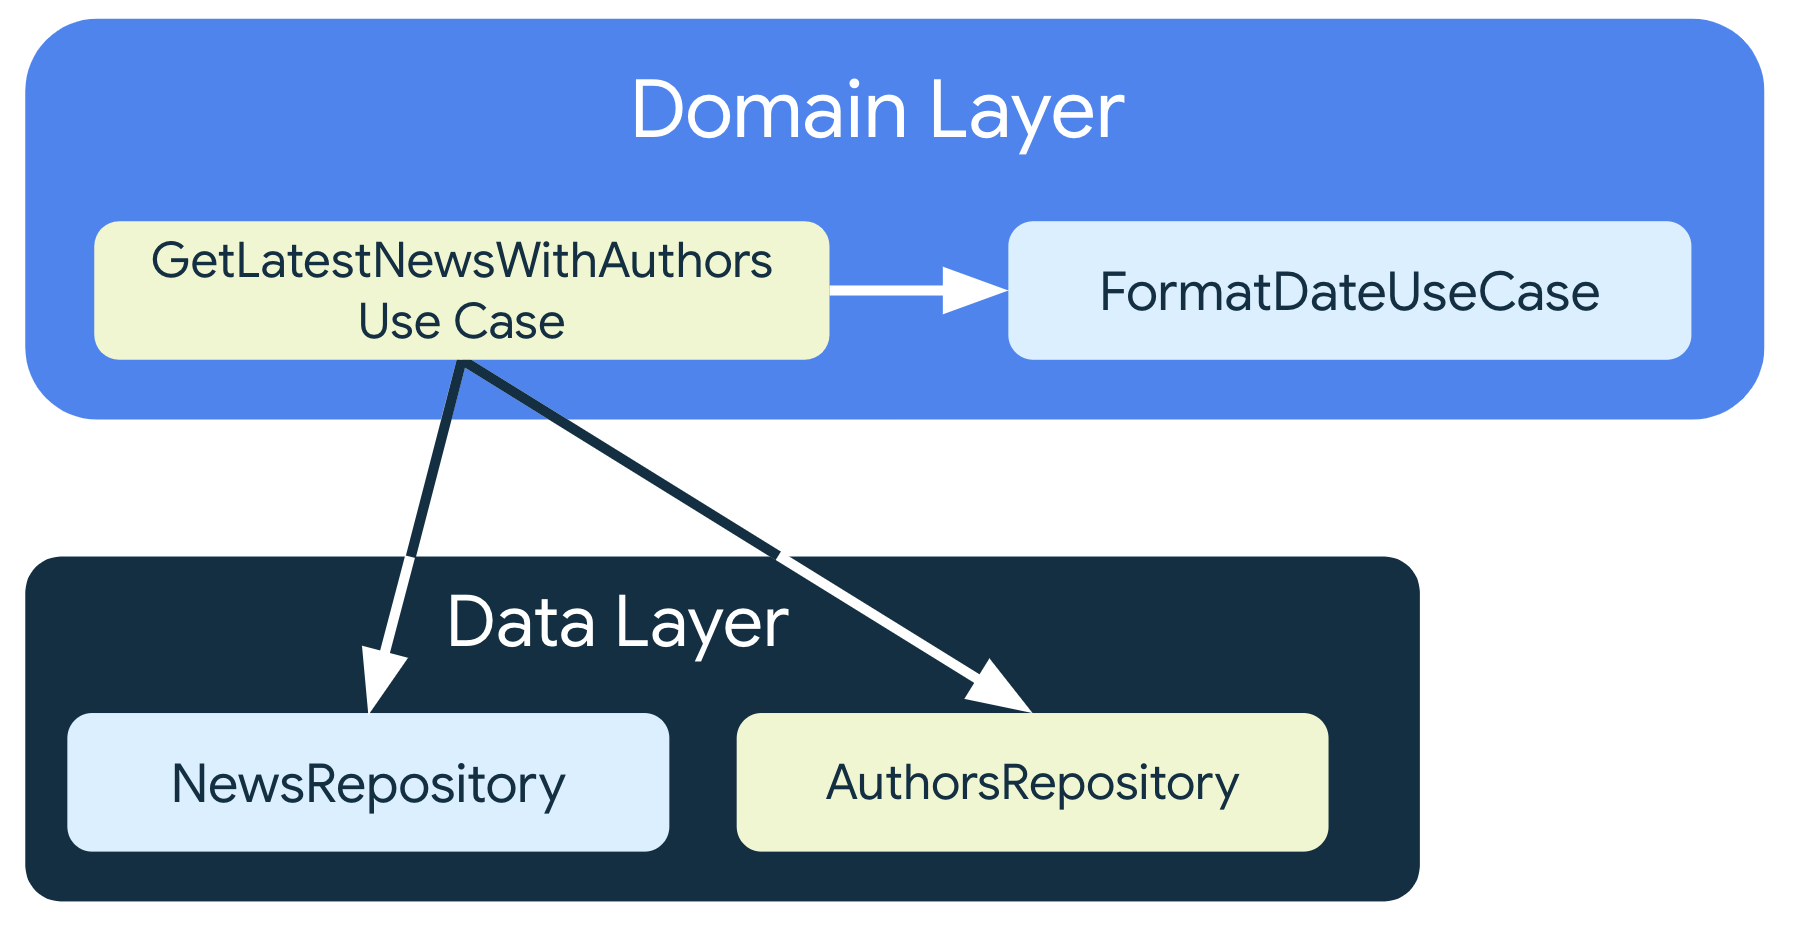 GetLatestNewsWithAuthorsUseCase 依附於資料層的存放區類別，但也依附於 FormatDataUseCase，這是屬於網域層的另一個用途類別。